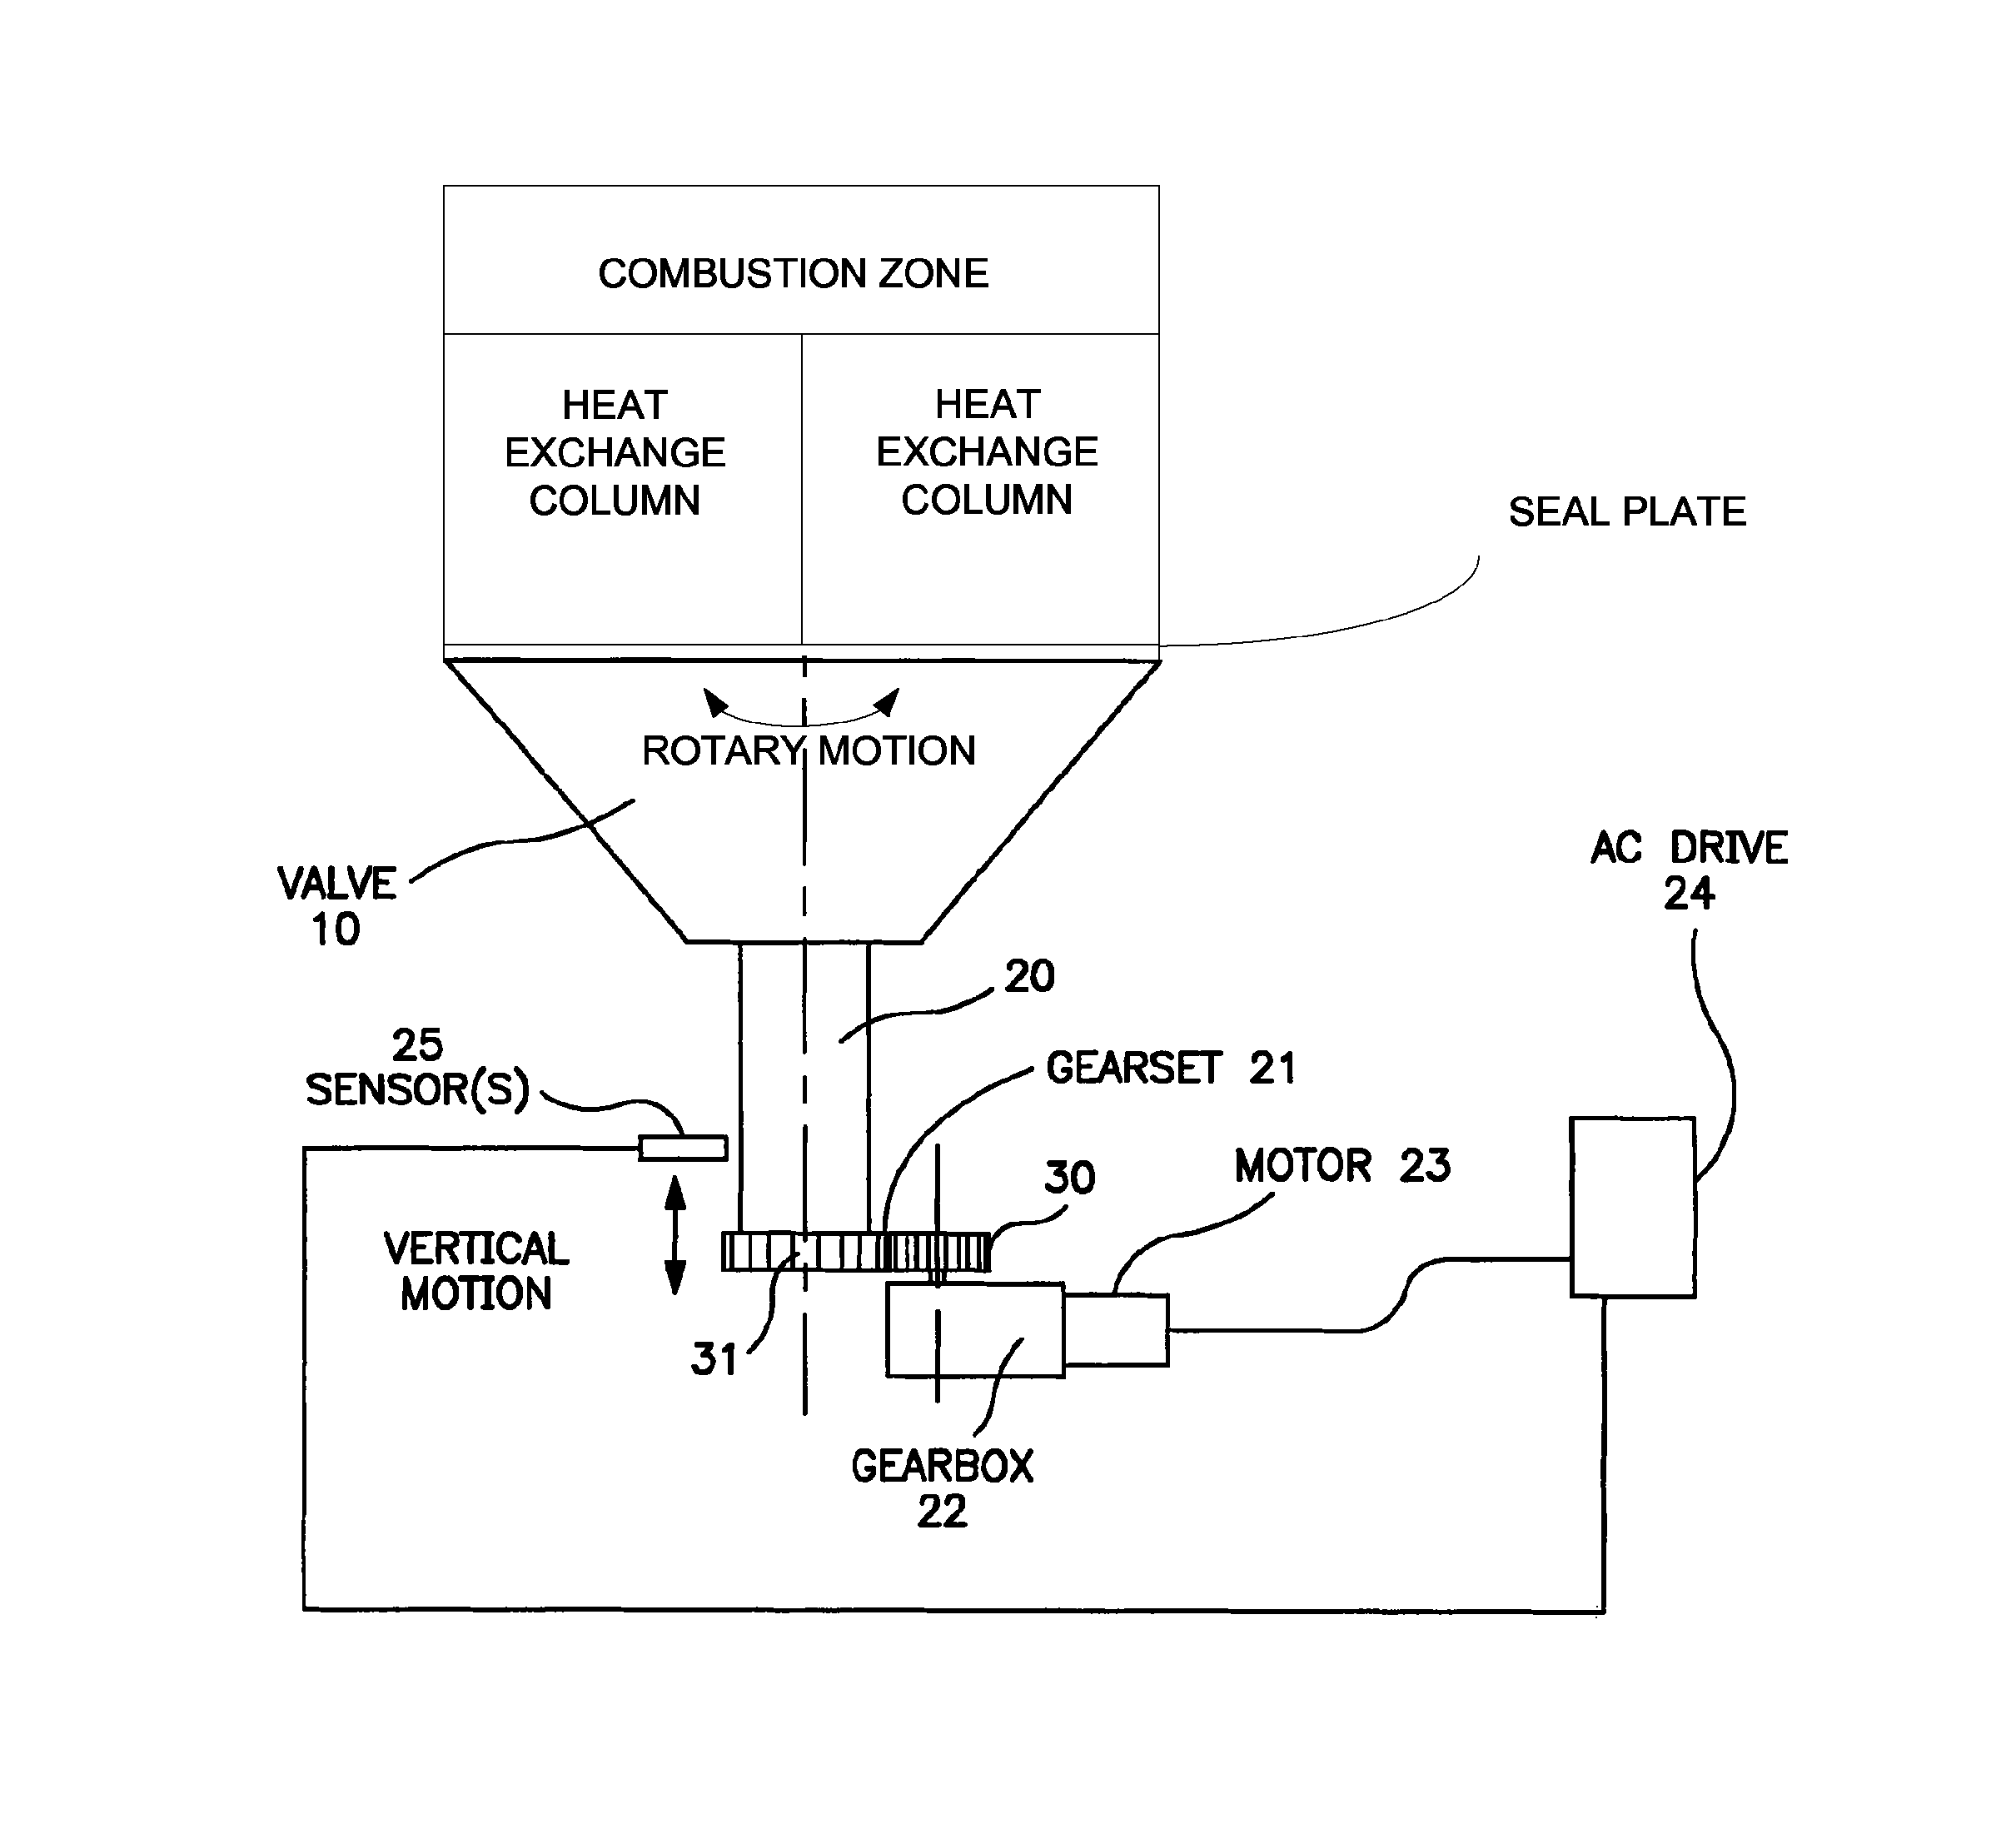 Electric valve left mechanism